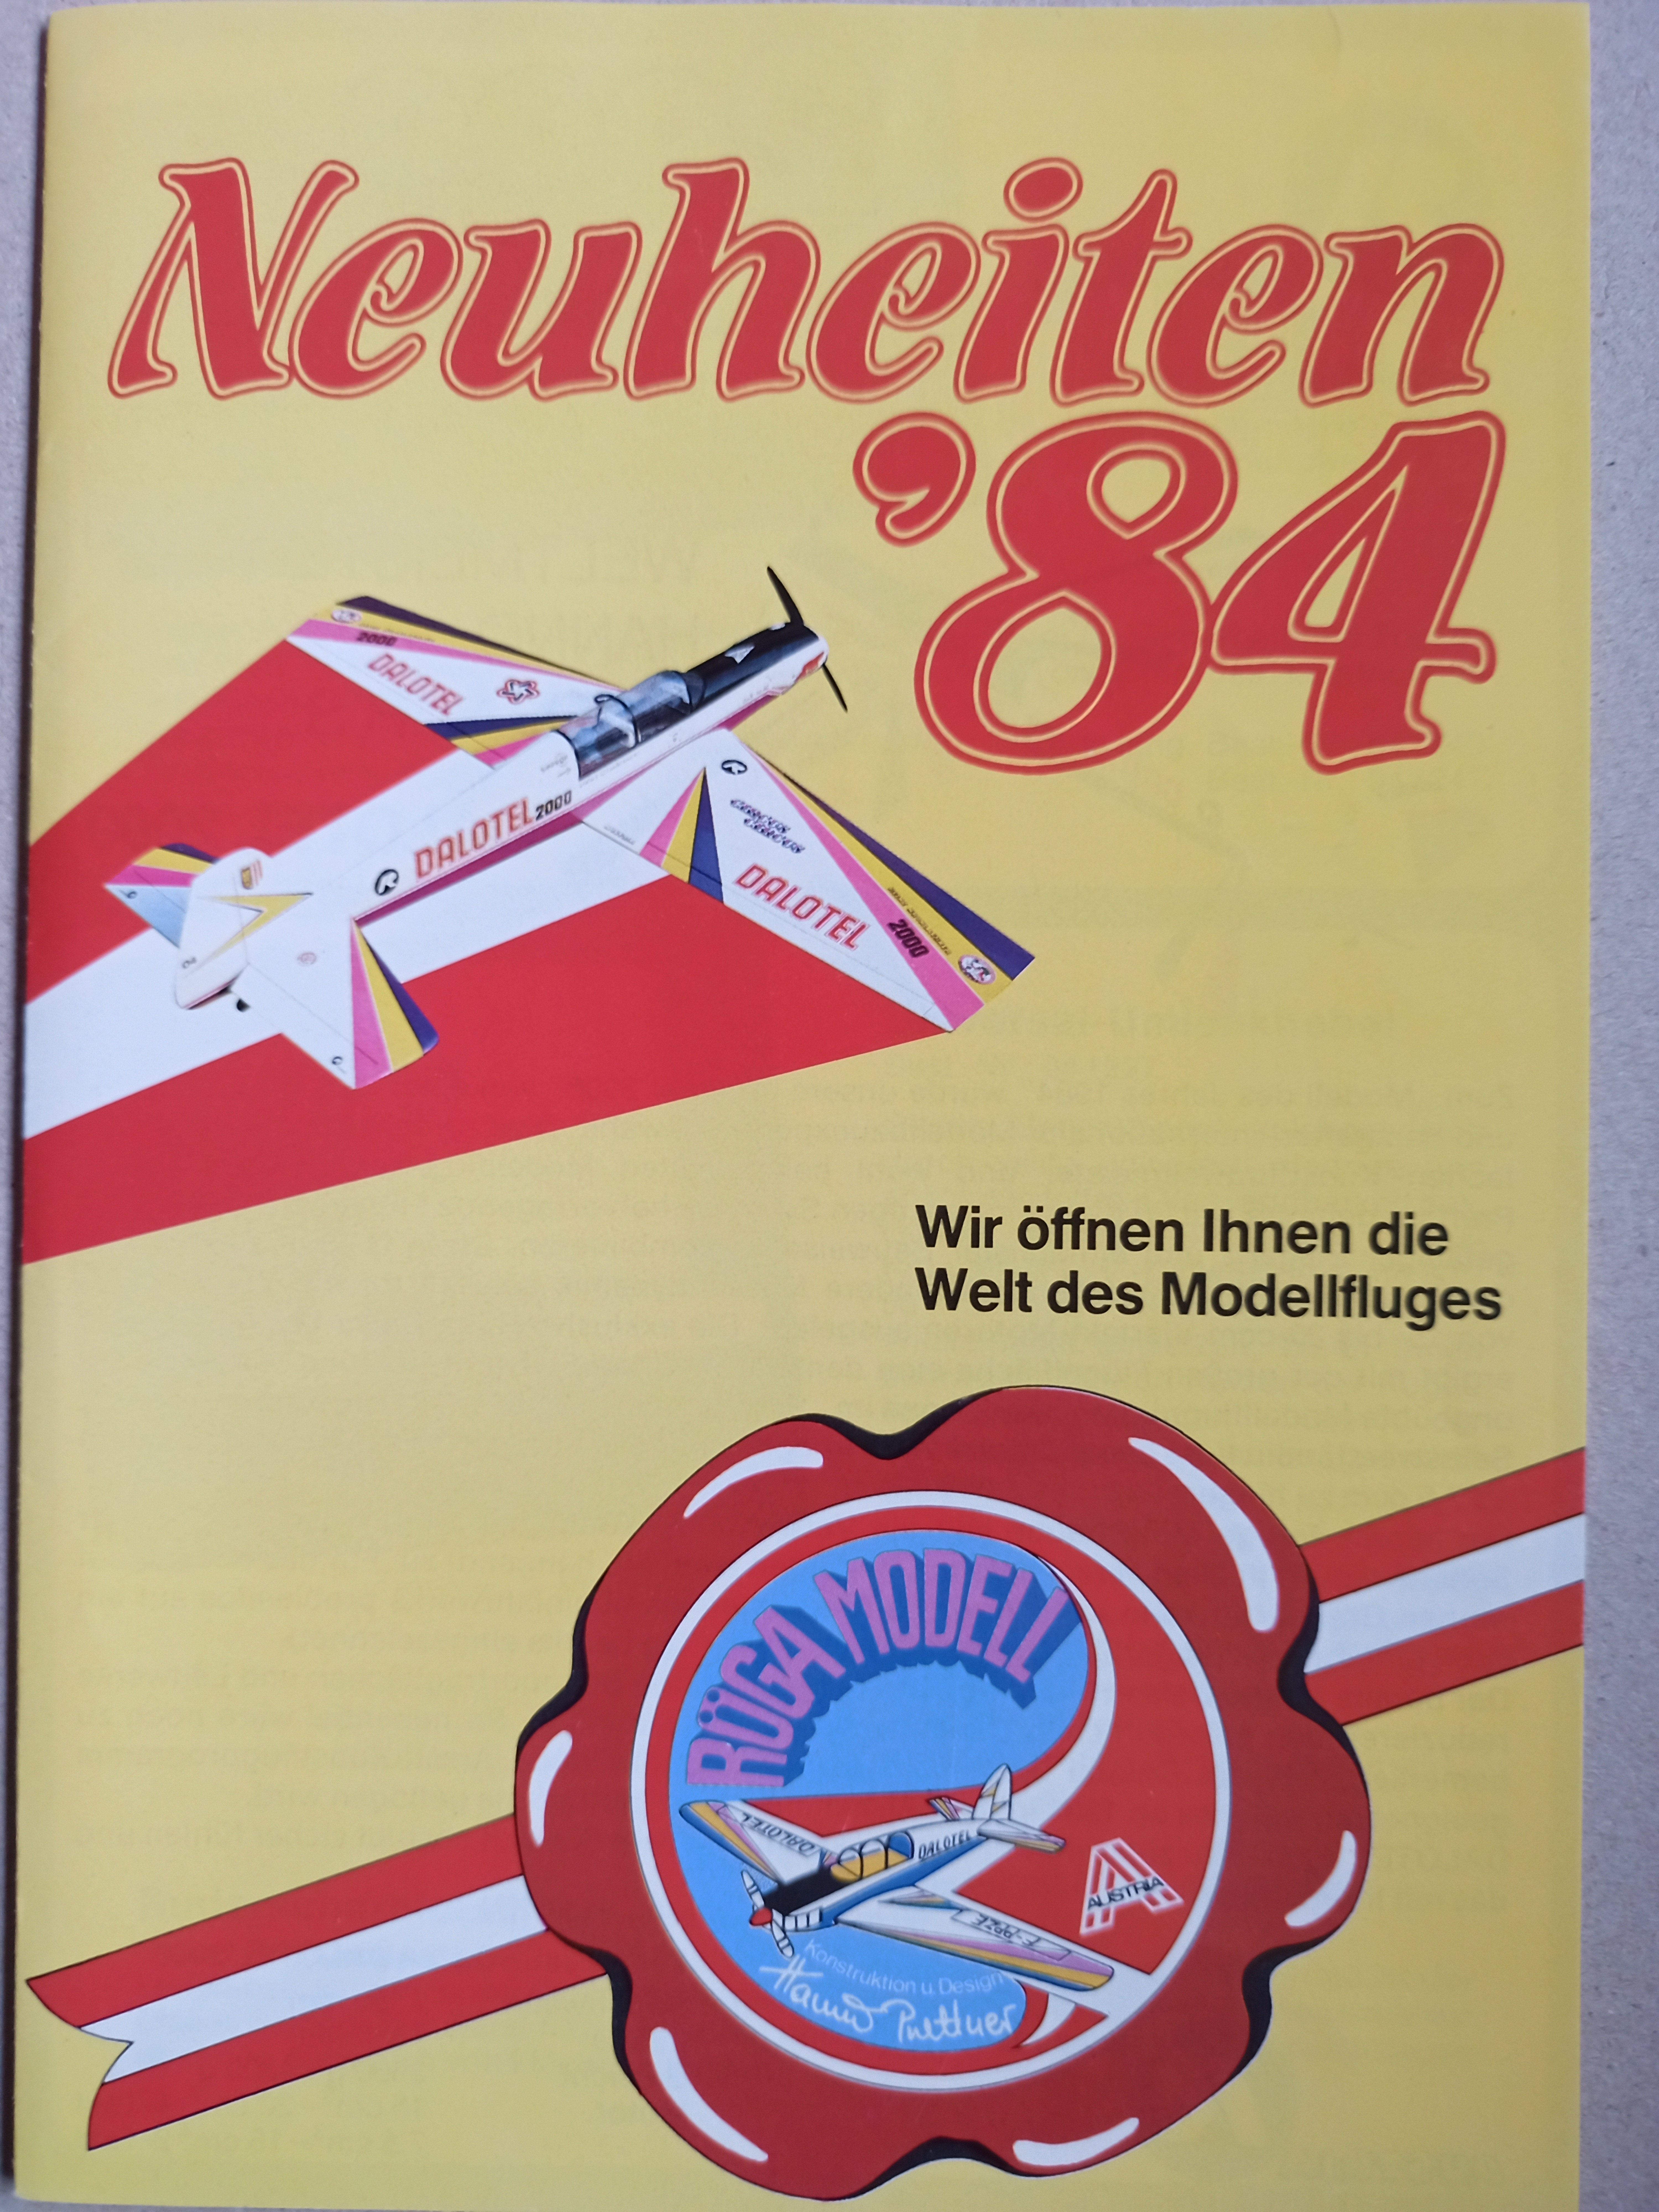 Röga Modell Neuheiten 1984 (Deutsches Segelflugmuseum mit Modellflug CC BY-NC-SA)